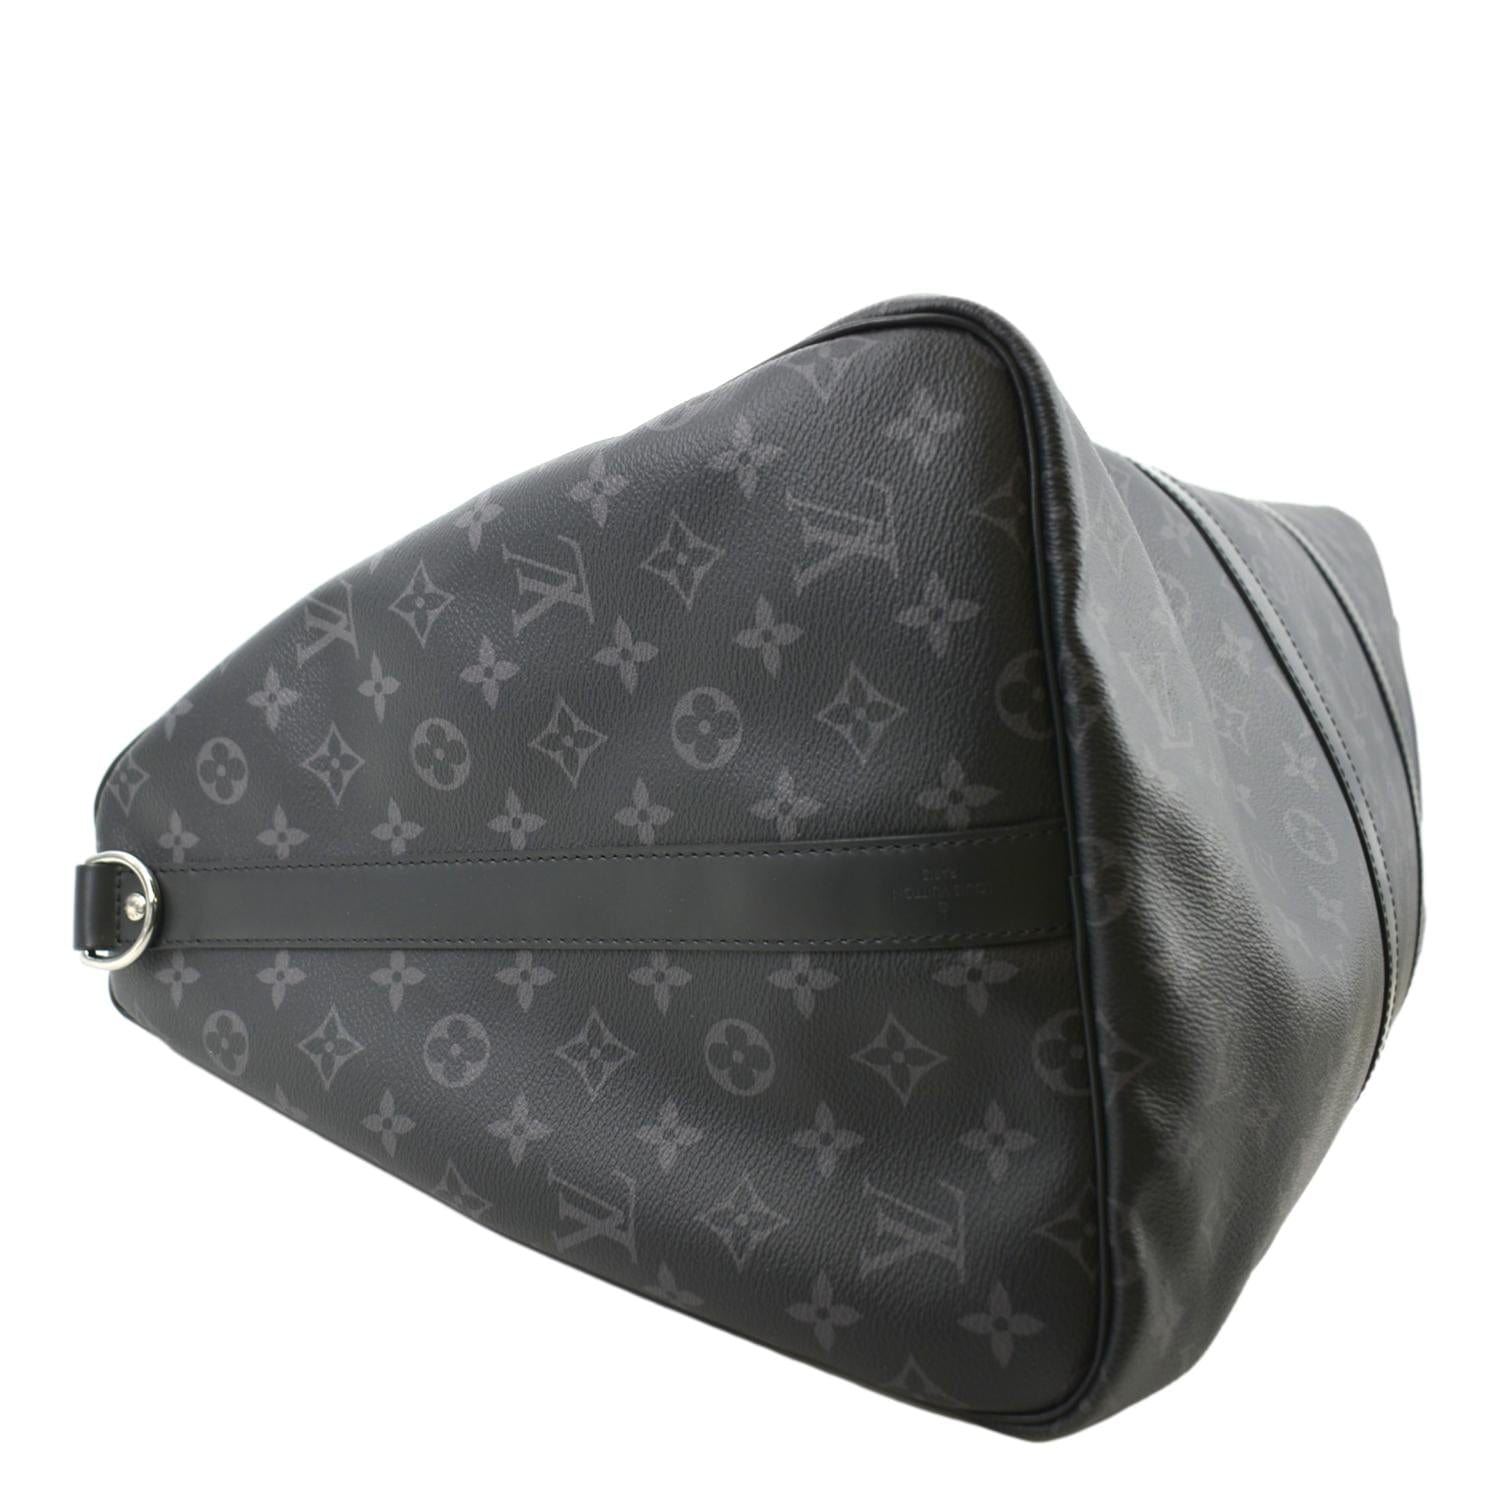 Louis Vuitton Keepall 55 Bandouliere Monogram Eclipse Duffle Bag